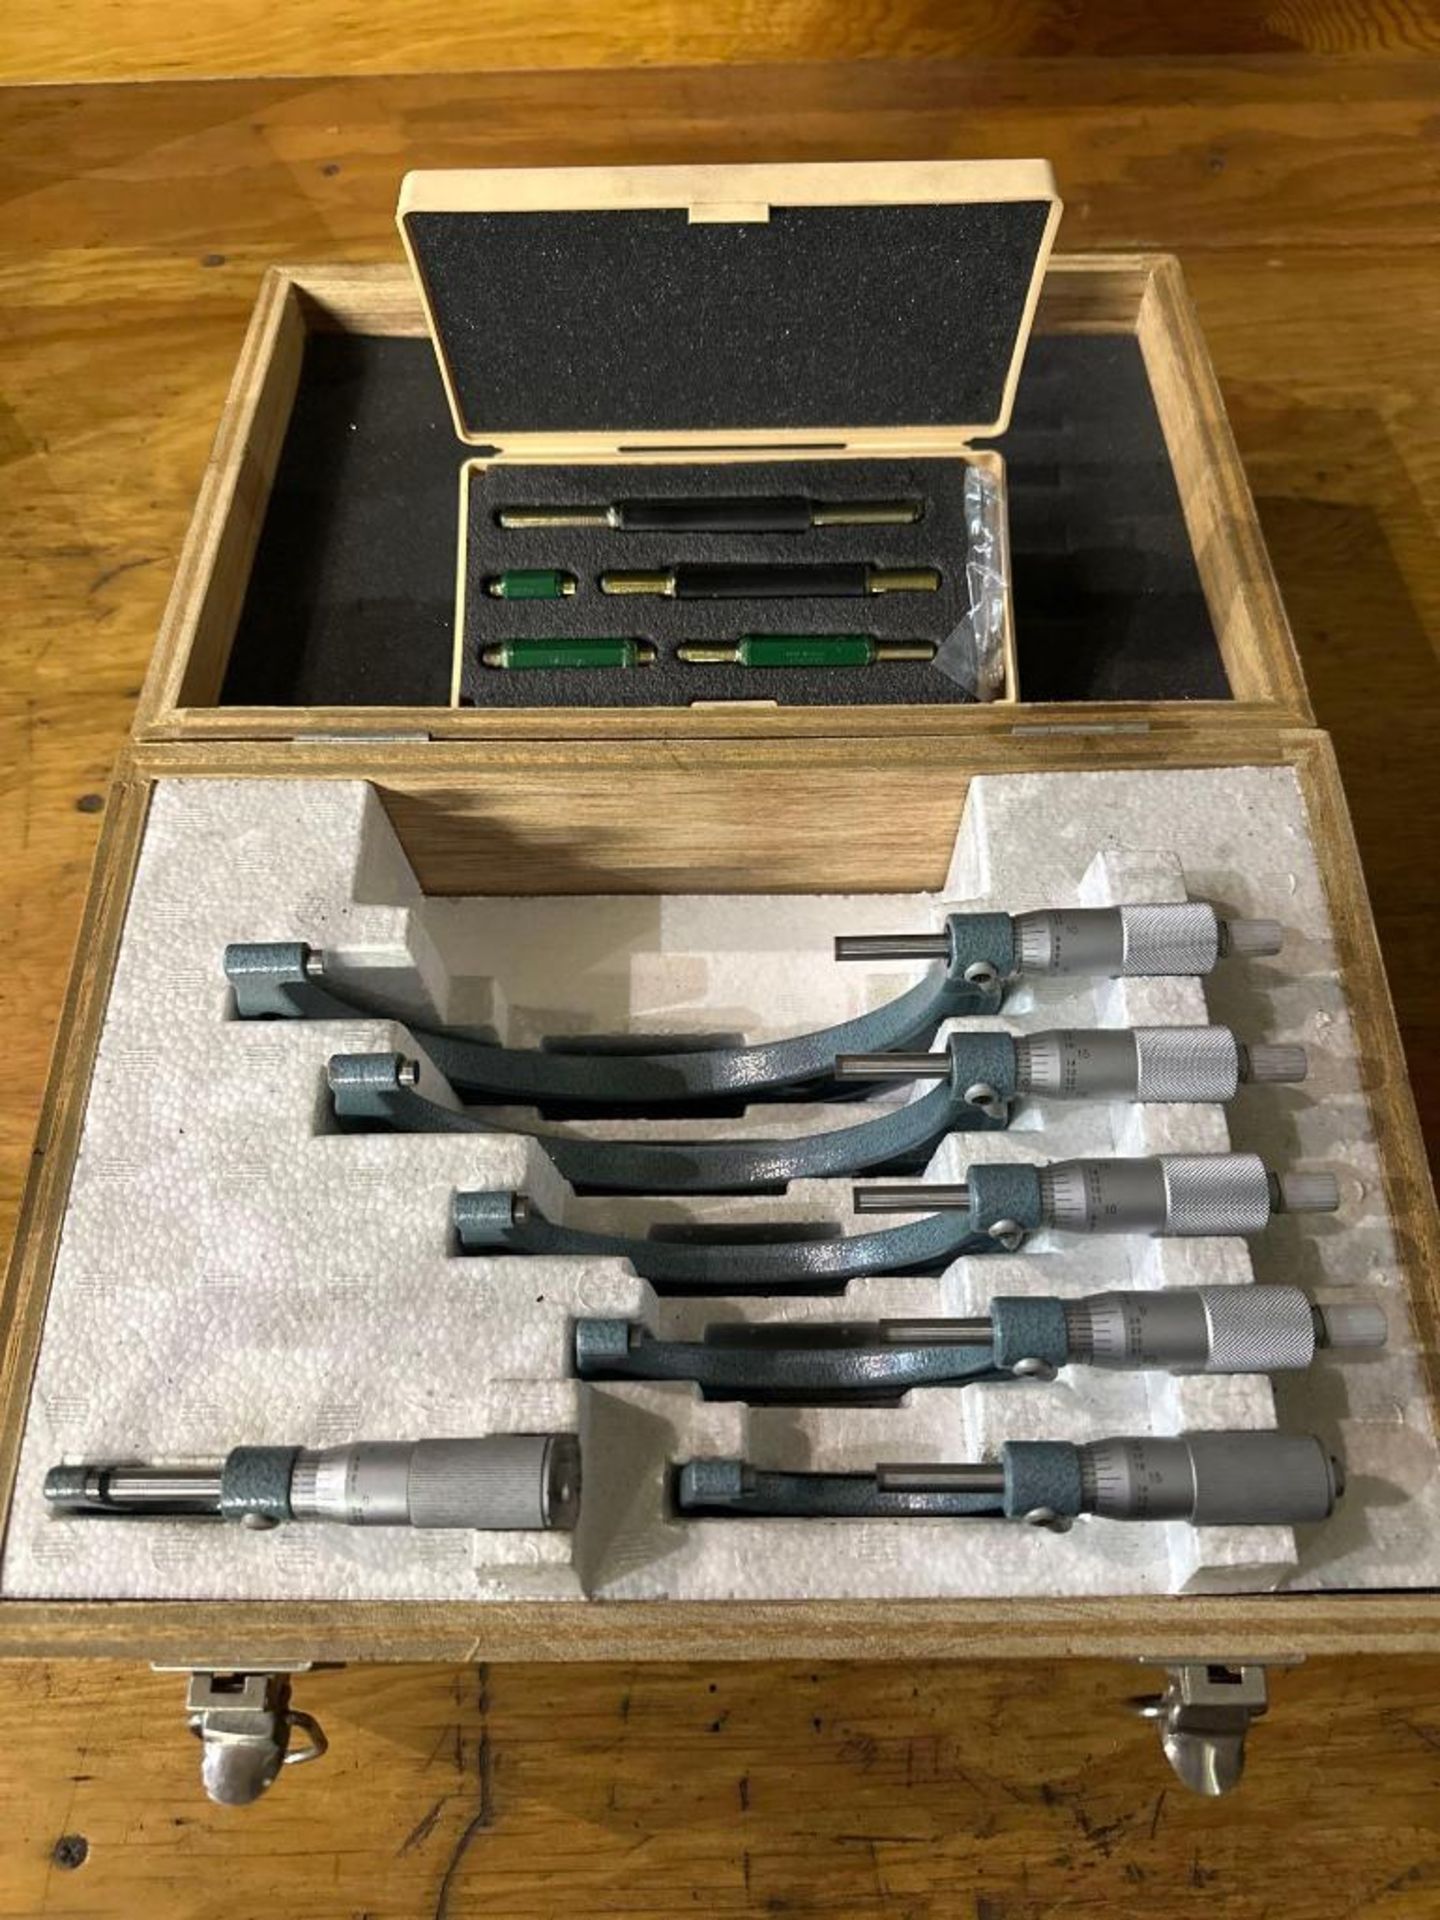 Mitutoyo Micrometers in Wooden Case - Image 2 of 4